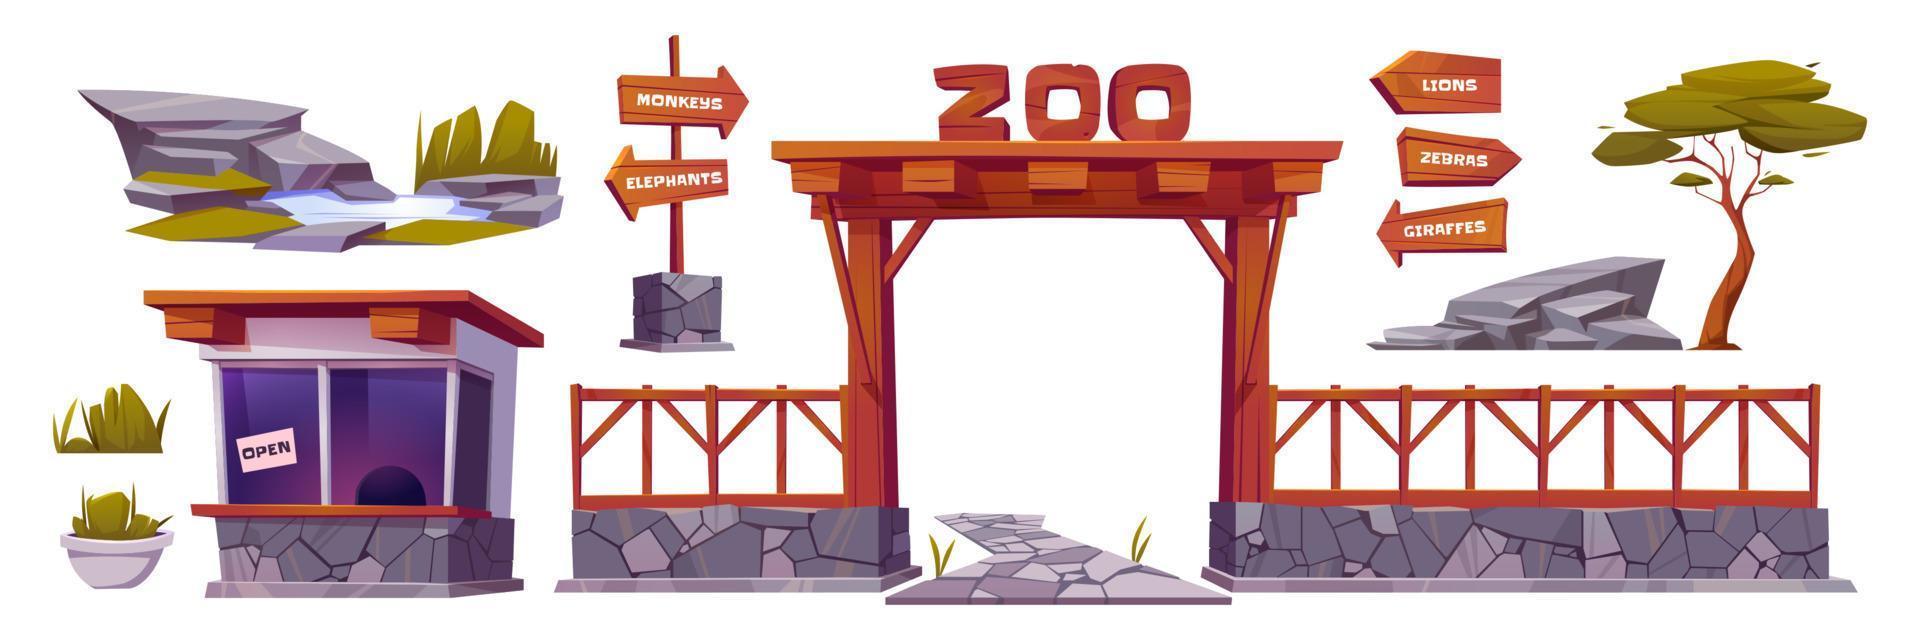 Zoo-Landschaftselemente Cartoon-Vektor-Set isoliert vektor